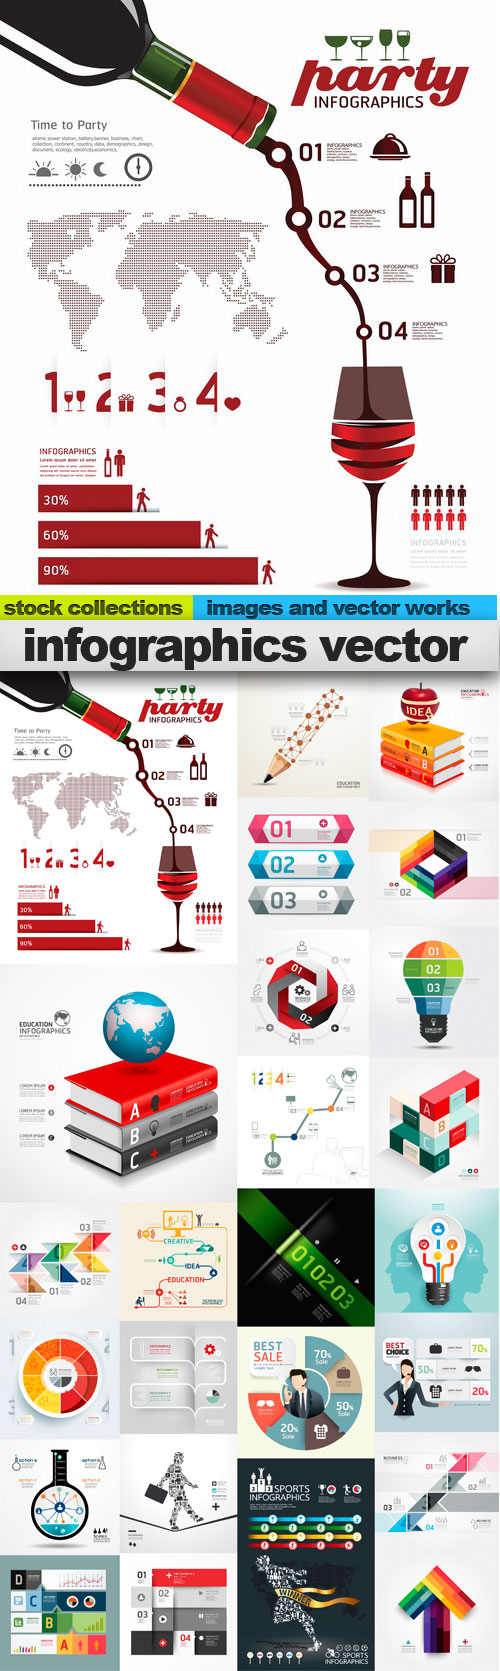 Infographics vector 2